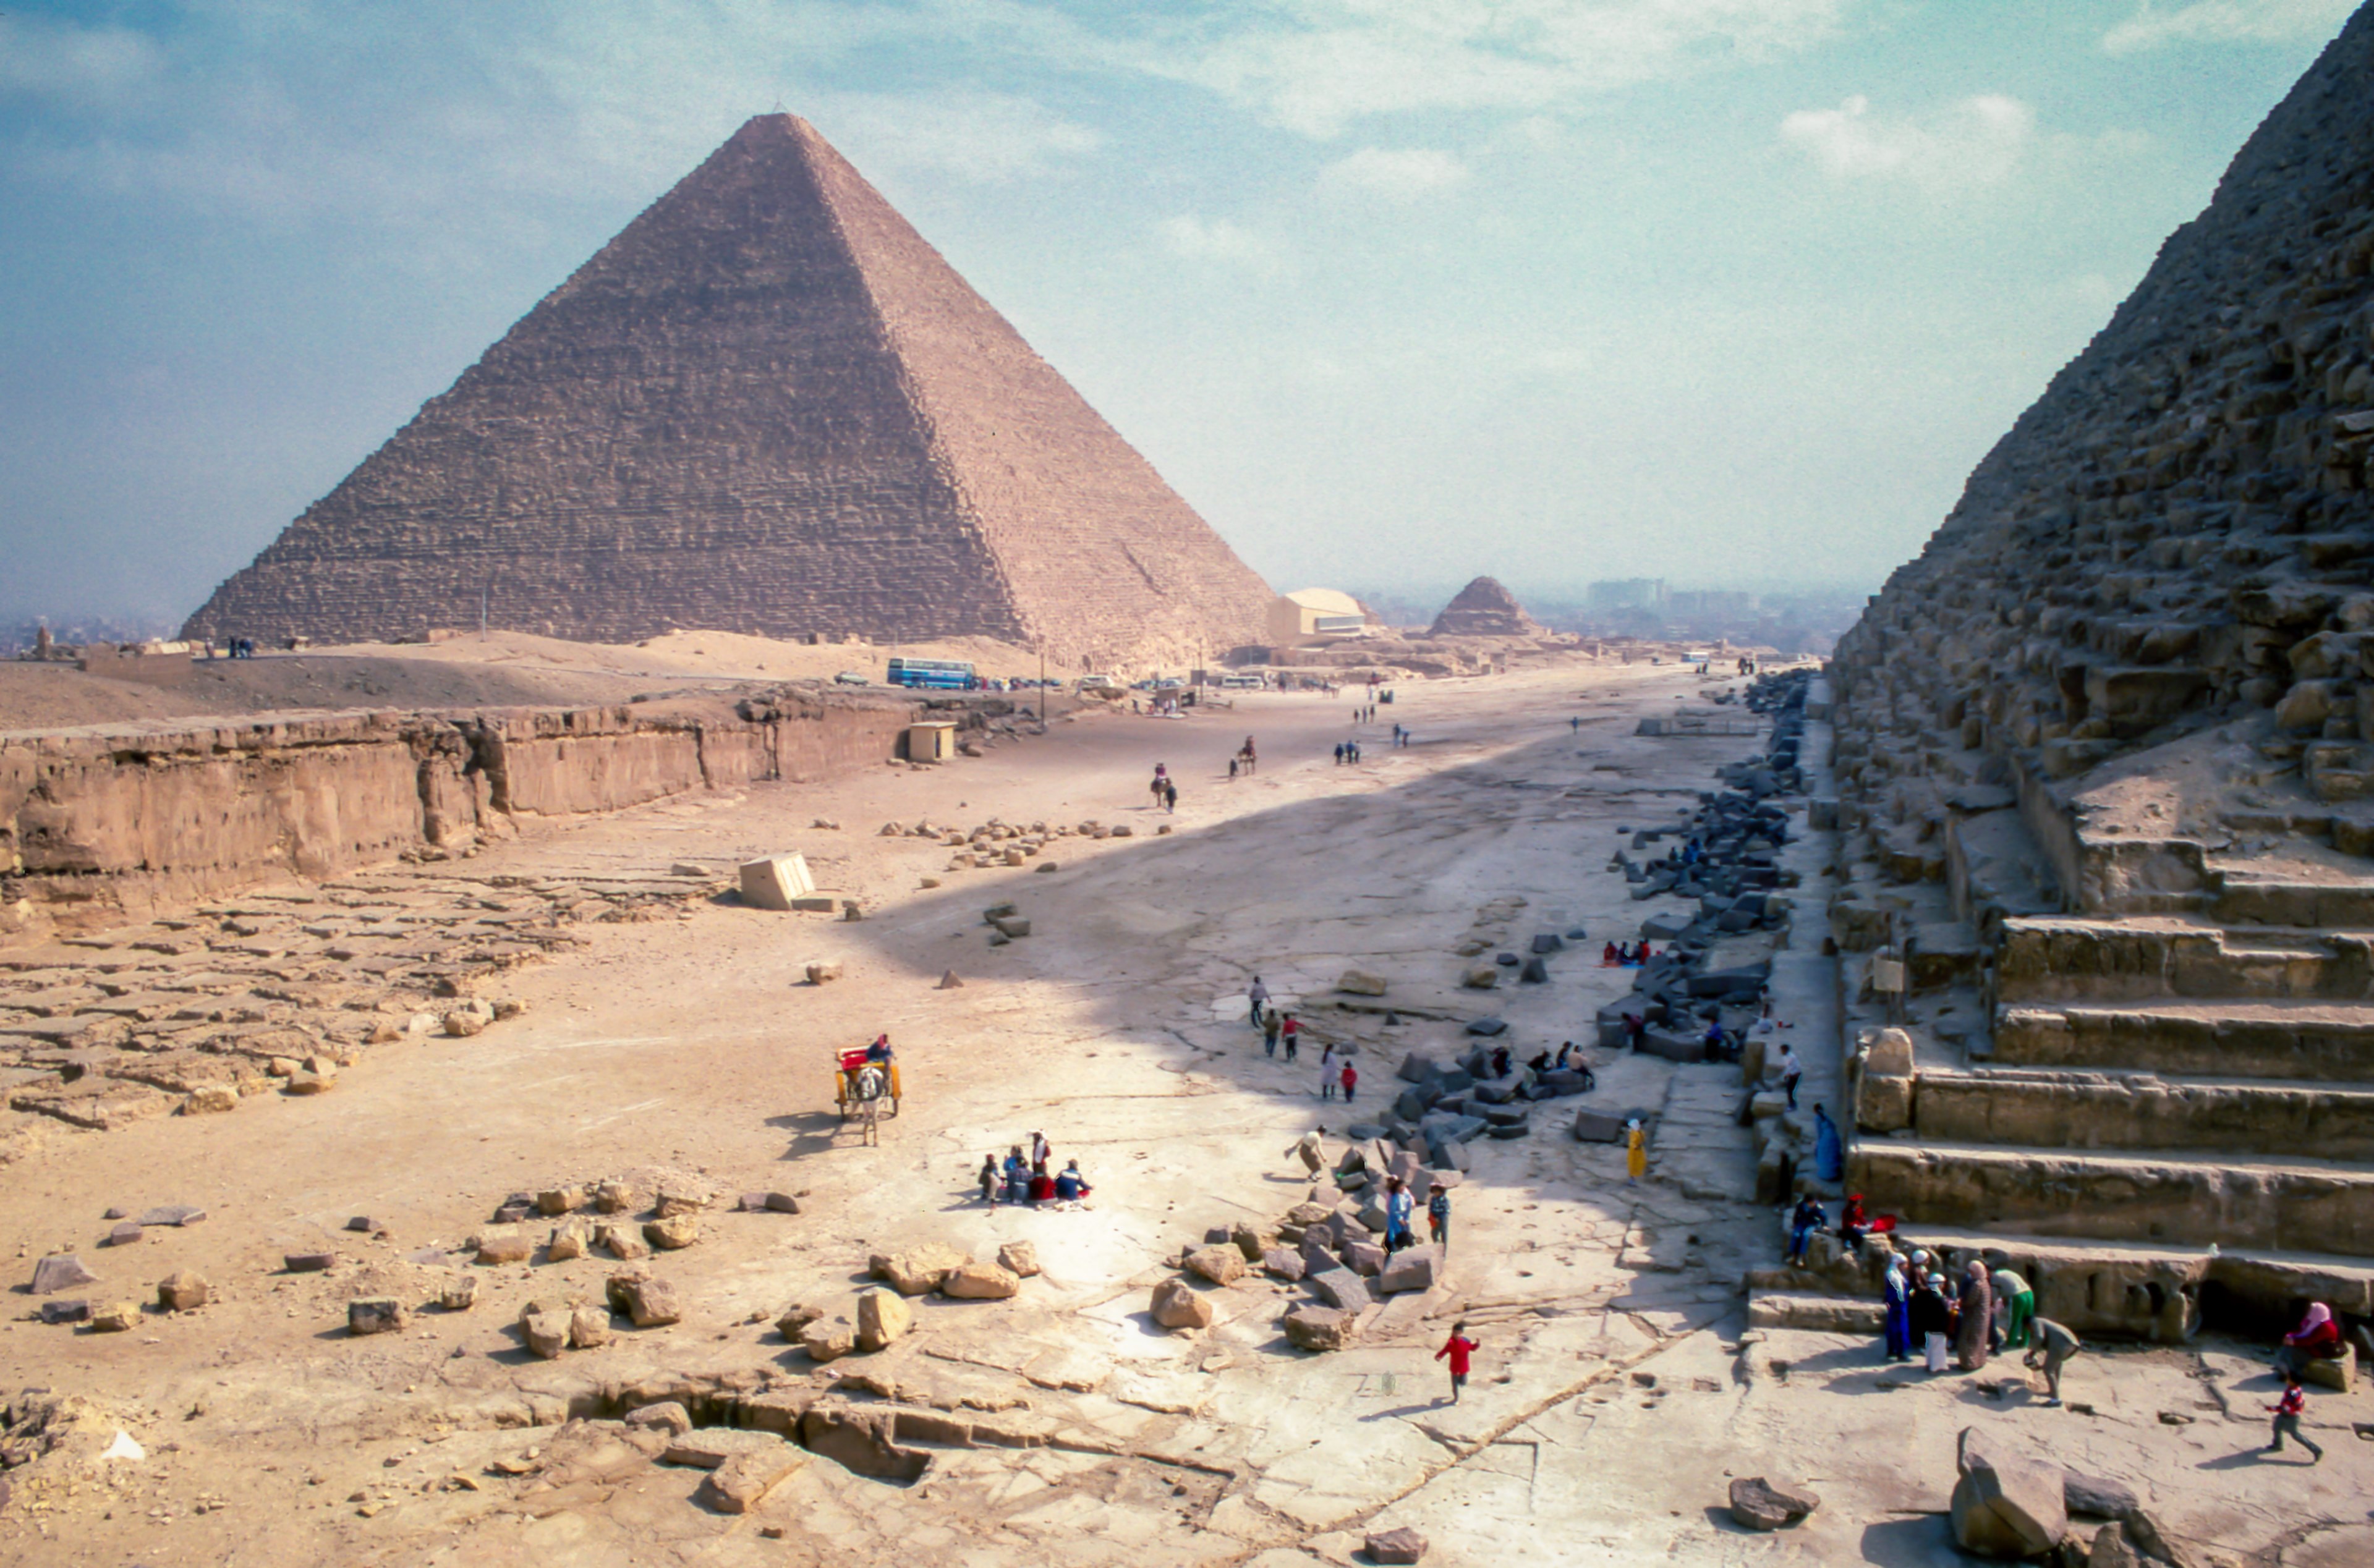 Wallpaper ID 252764 ruin pyramid desert and egypt hd 4k